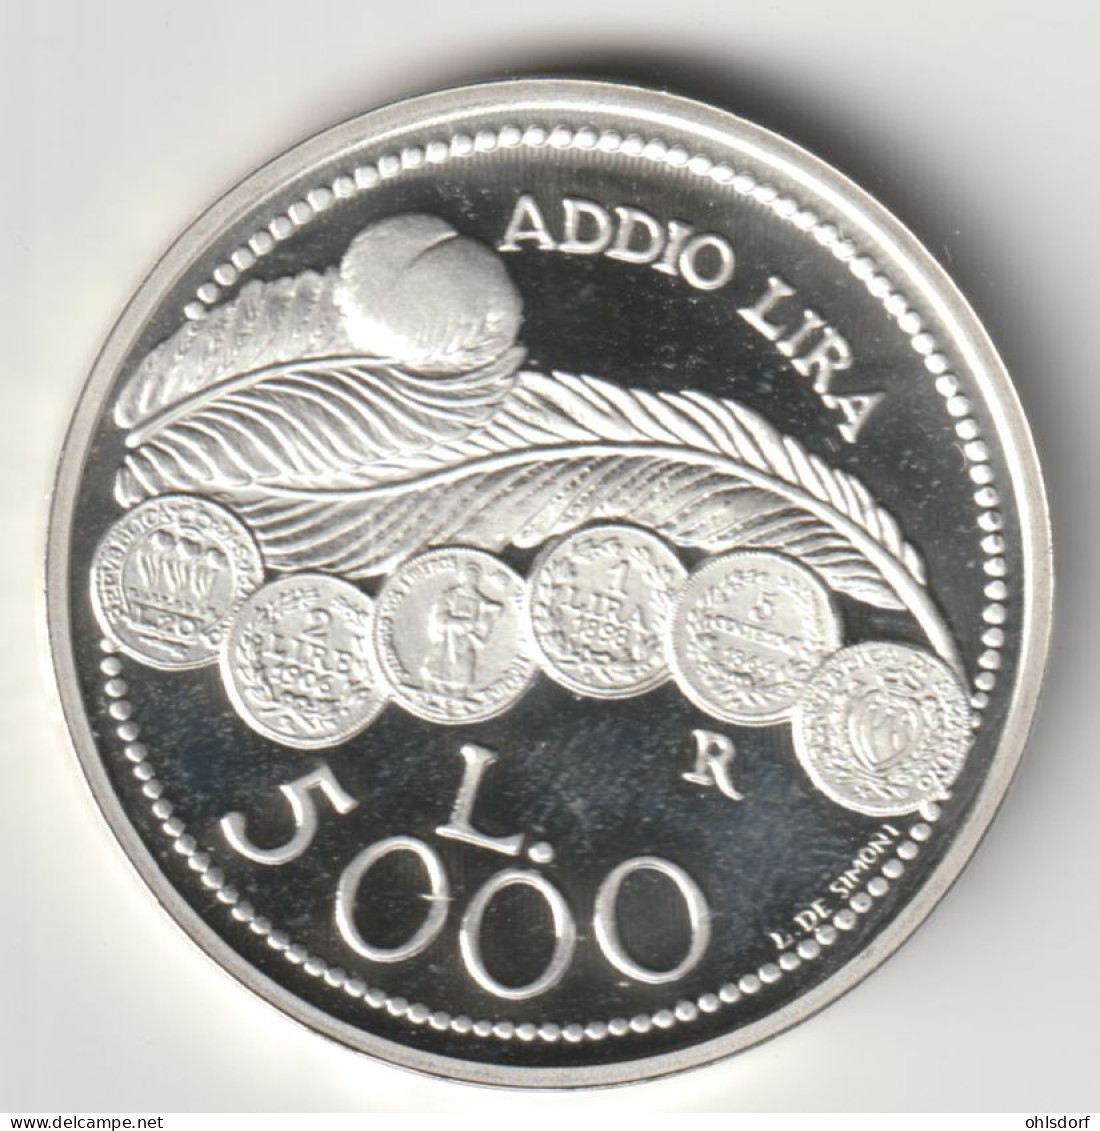 SAN MARINO 2001: 5000 Lire, Addio Lira, Silver, KM 436 - San Marino